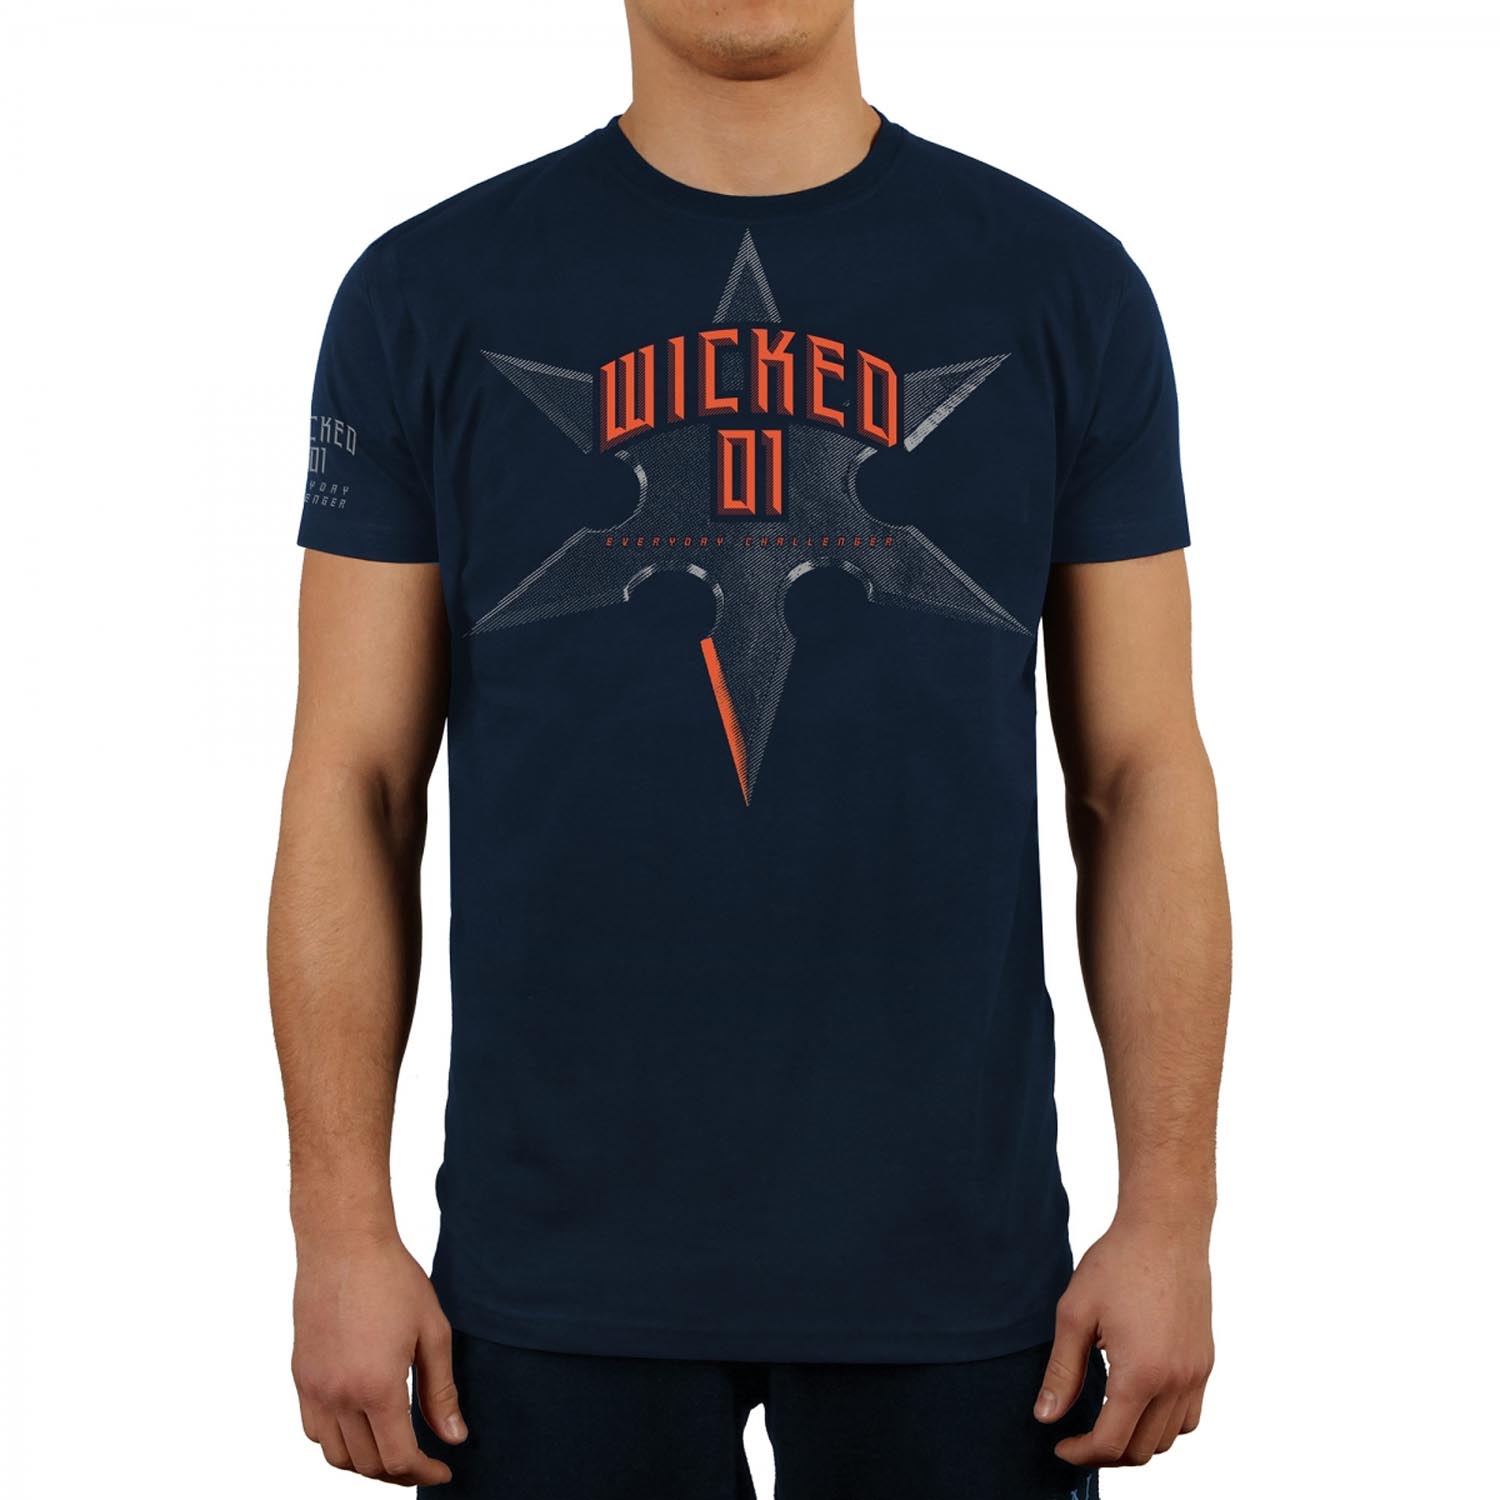 Wicked One T-Shirt, Shuriken, navy